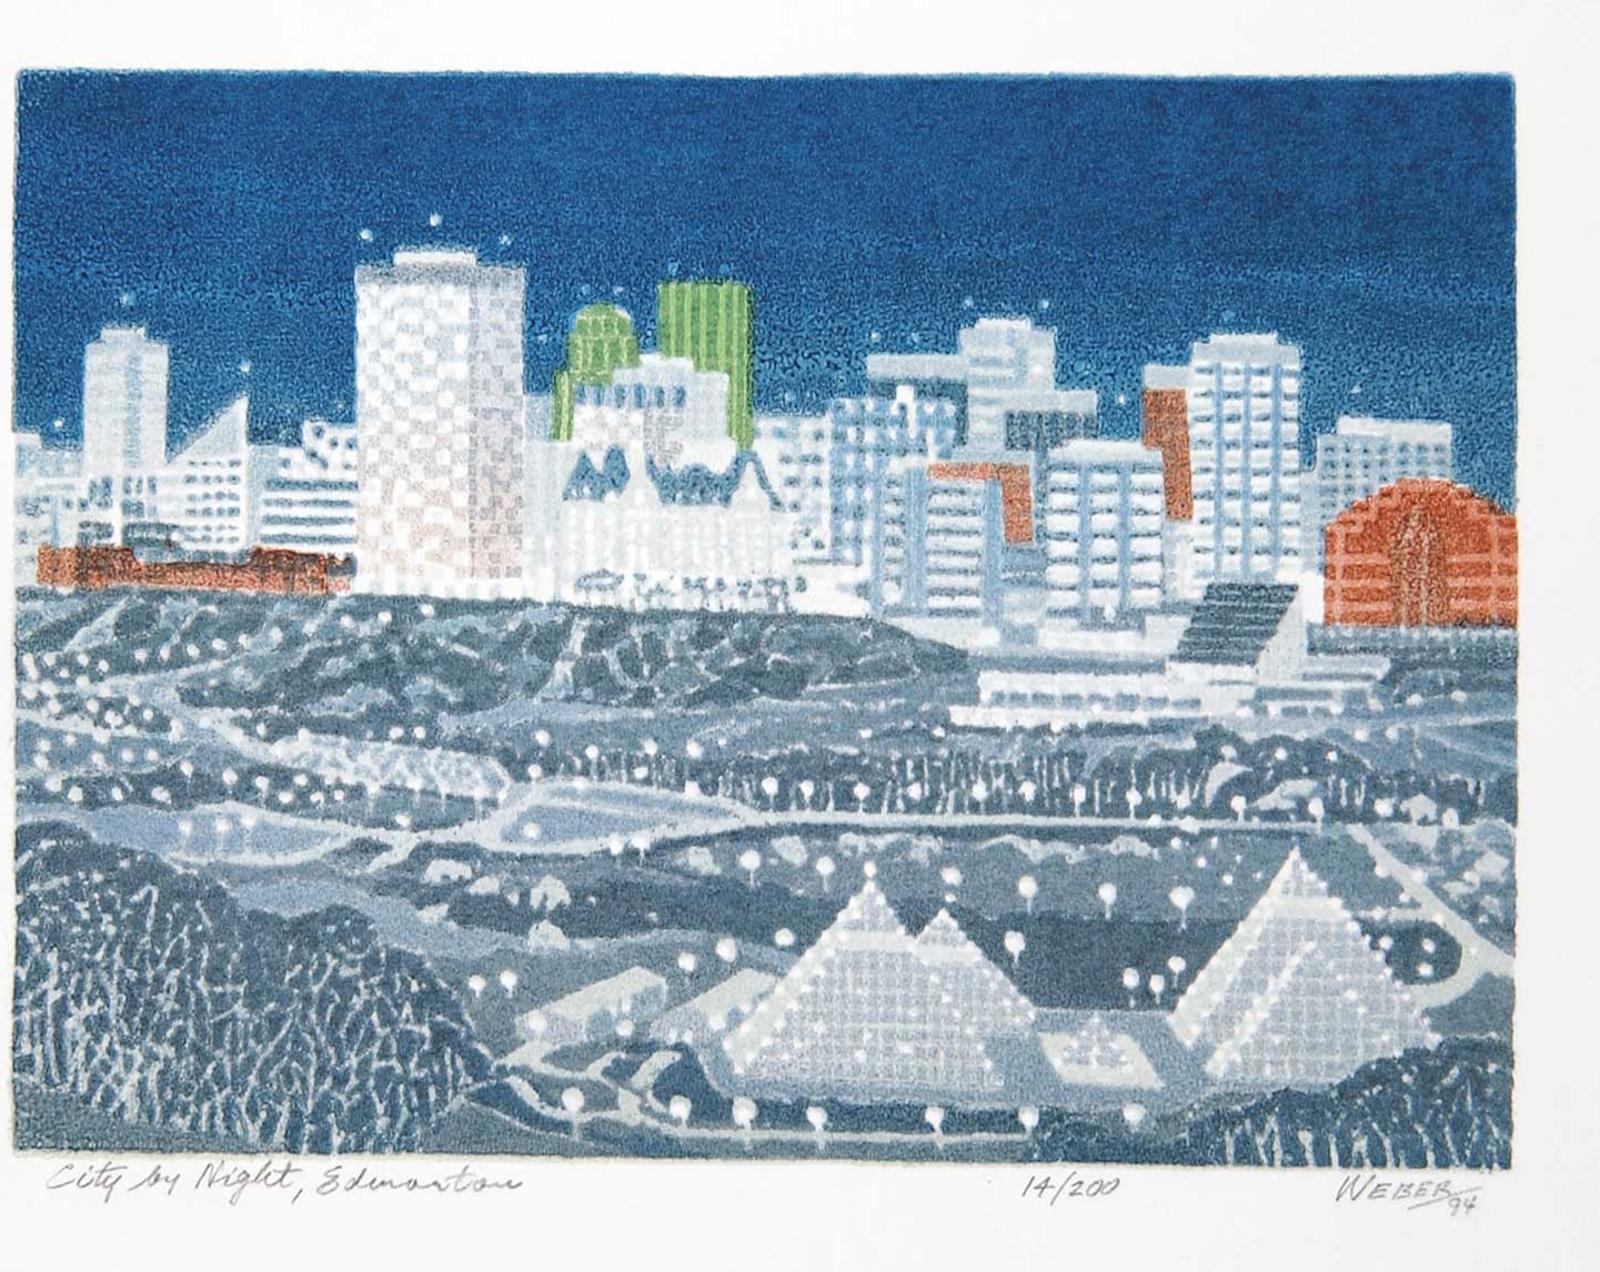 George Weber (1907-2002) - City by Night, Edmonton  #14/200